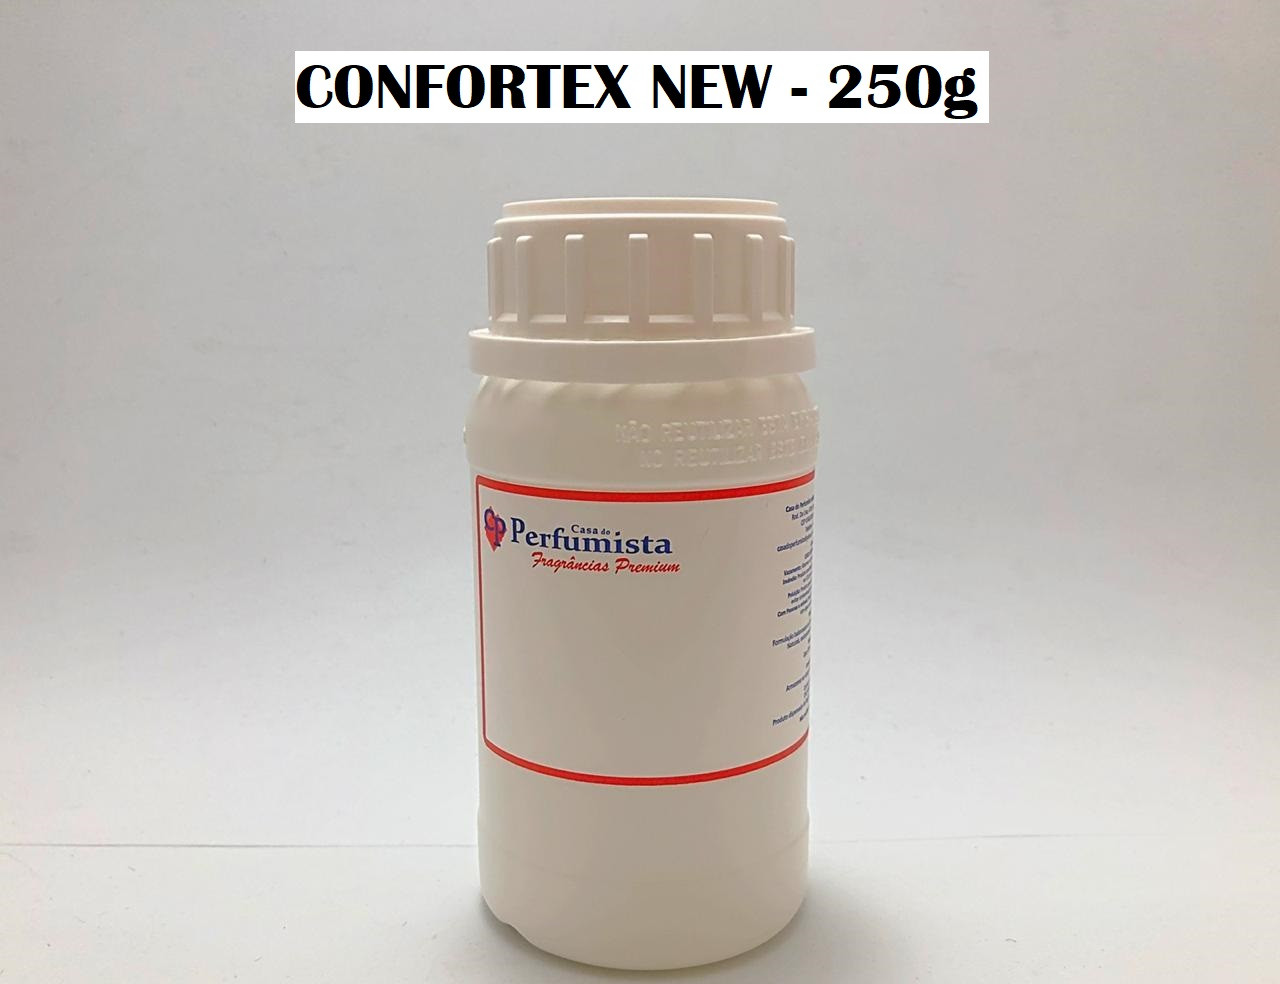 CONFORTEX NEW - 250g